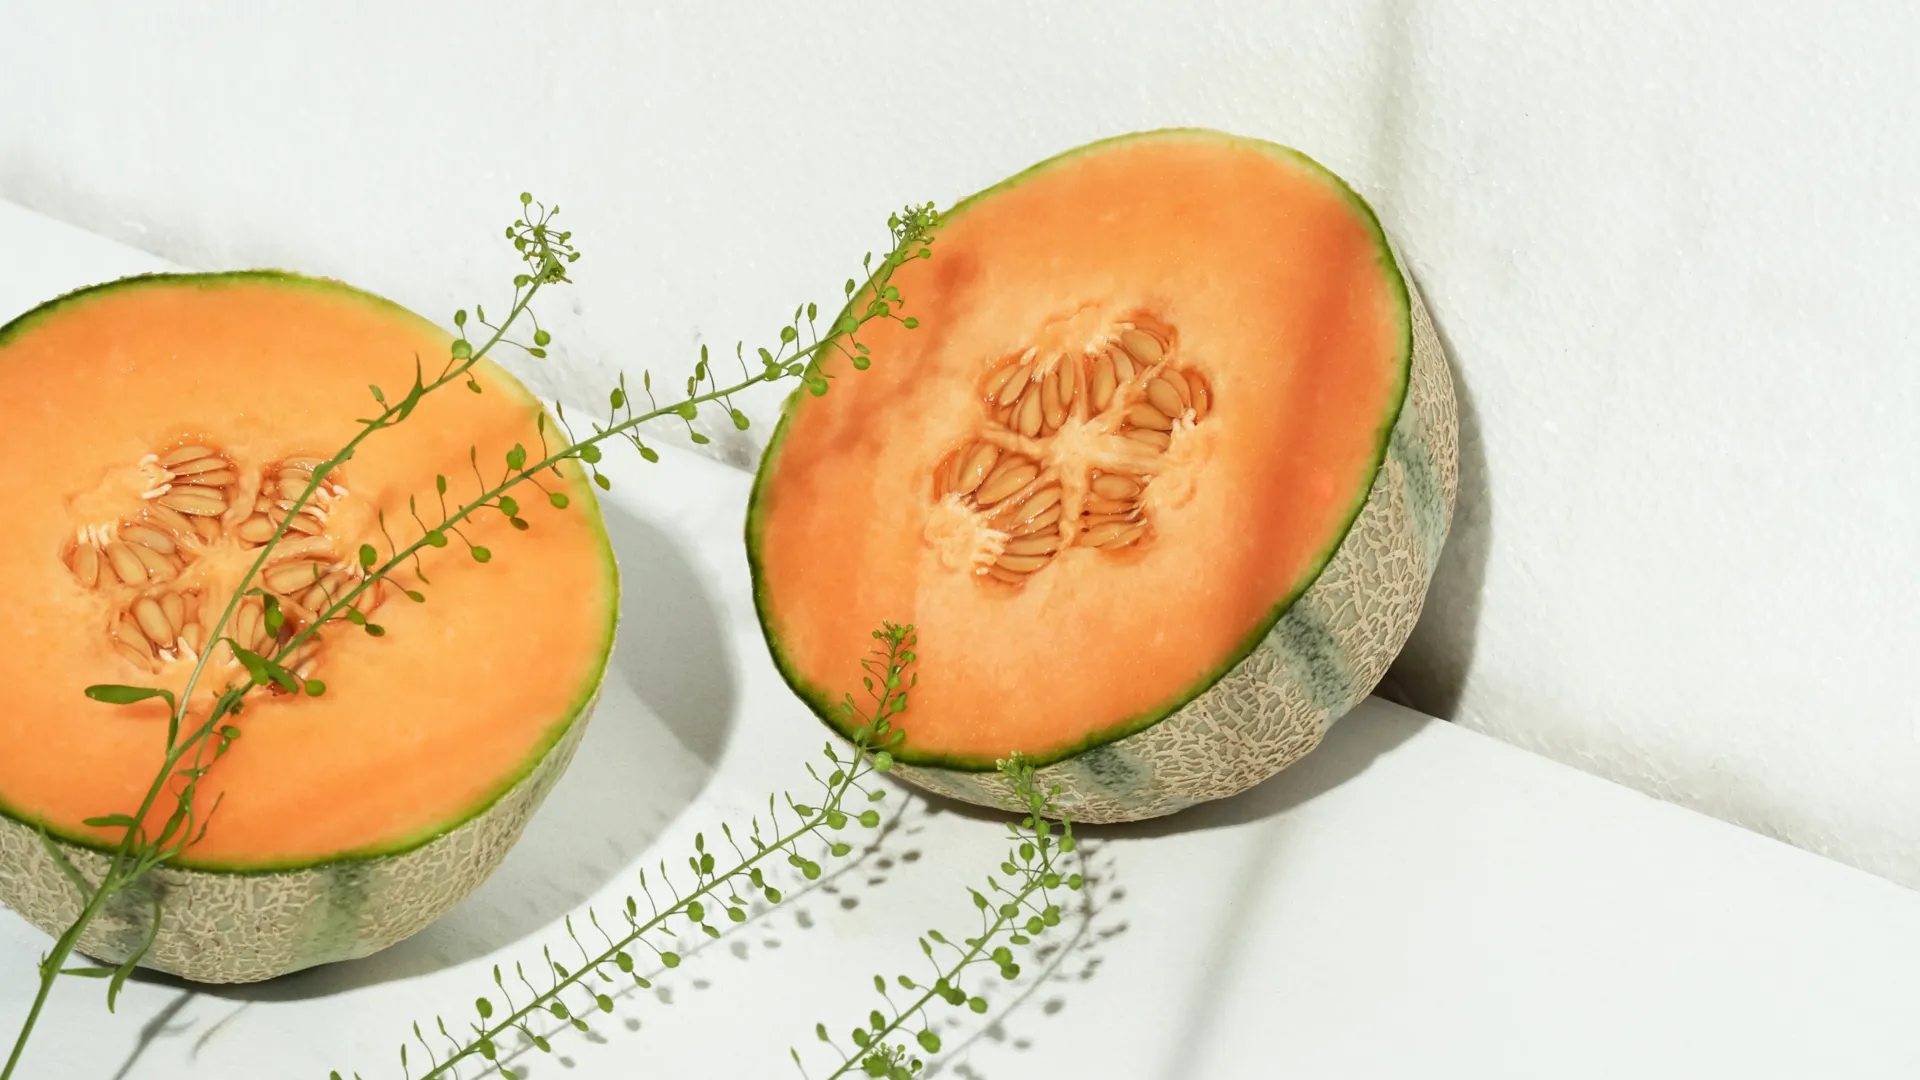 Bingung Pilih Melon? Yuk, Ikuti 7 Tips Cara Memilih Melon yang Manis!